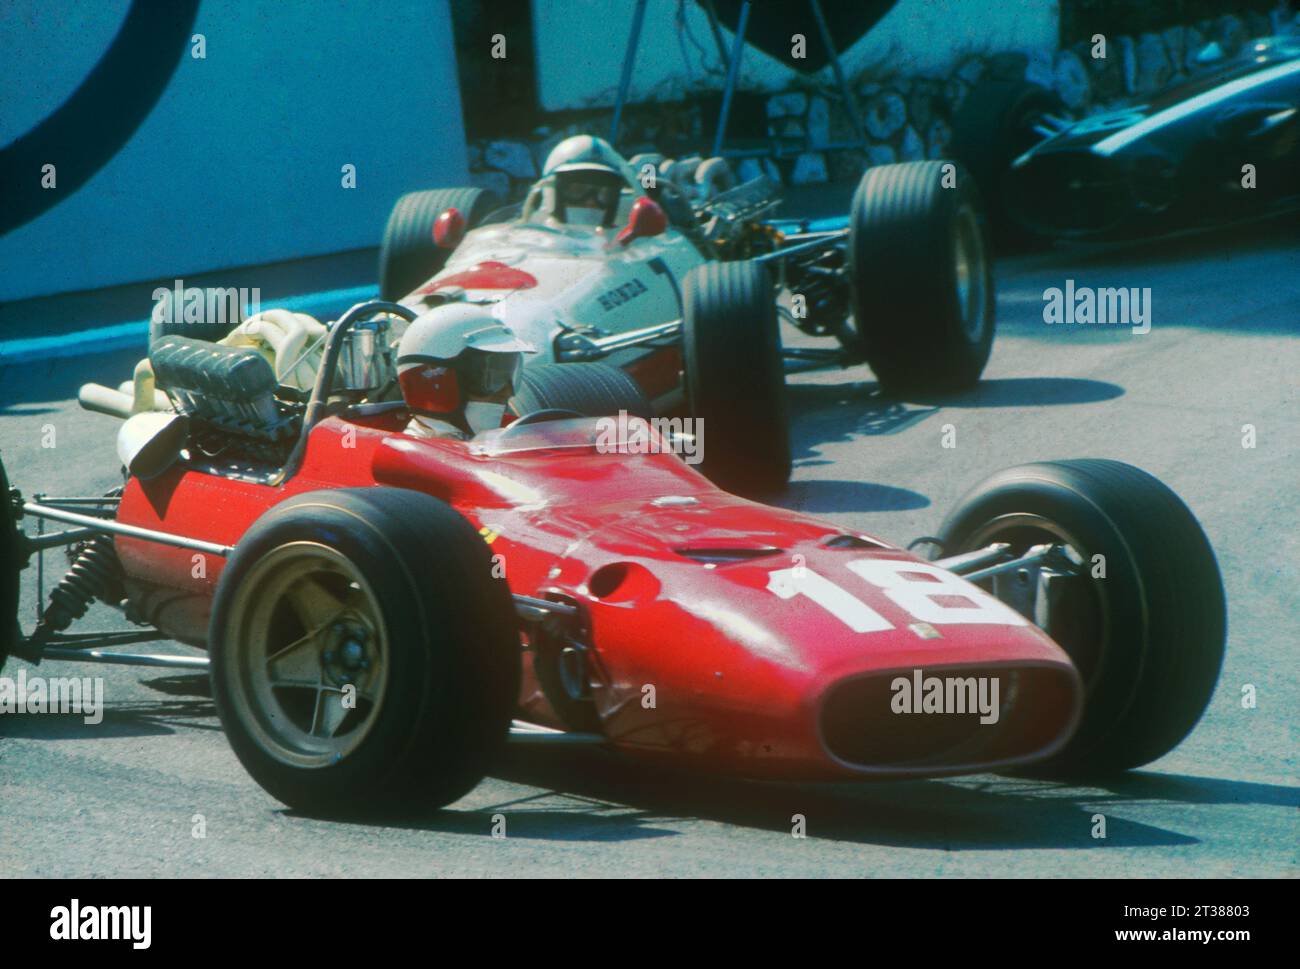 Monaco Granp Prix 1967. Lorenzo Bandini (Ferrari) followed by John Surtees (Honda) at Virage de la Gare (Station Hairpin). Bandini would suffer a tragic accident toward the end of the race. Stock Photo